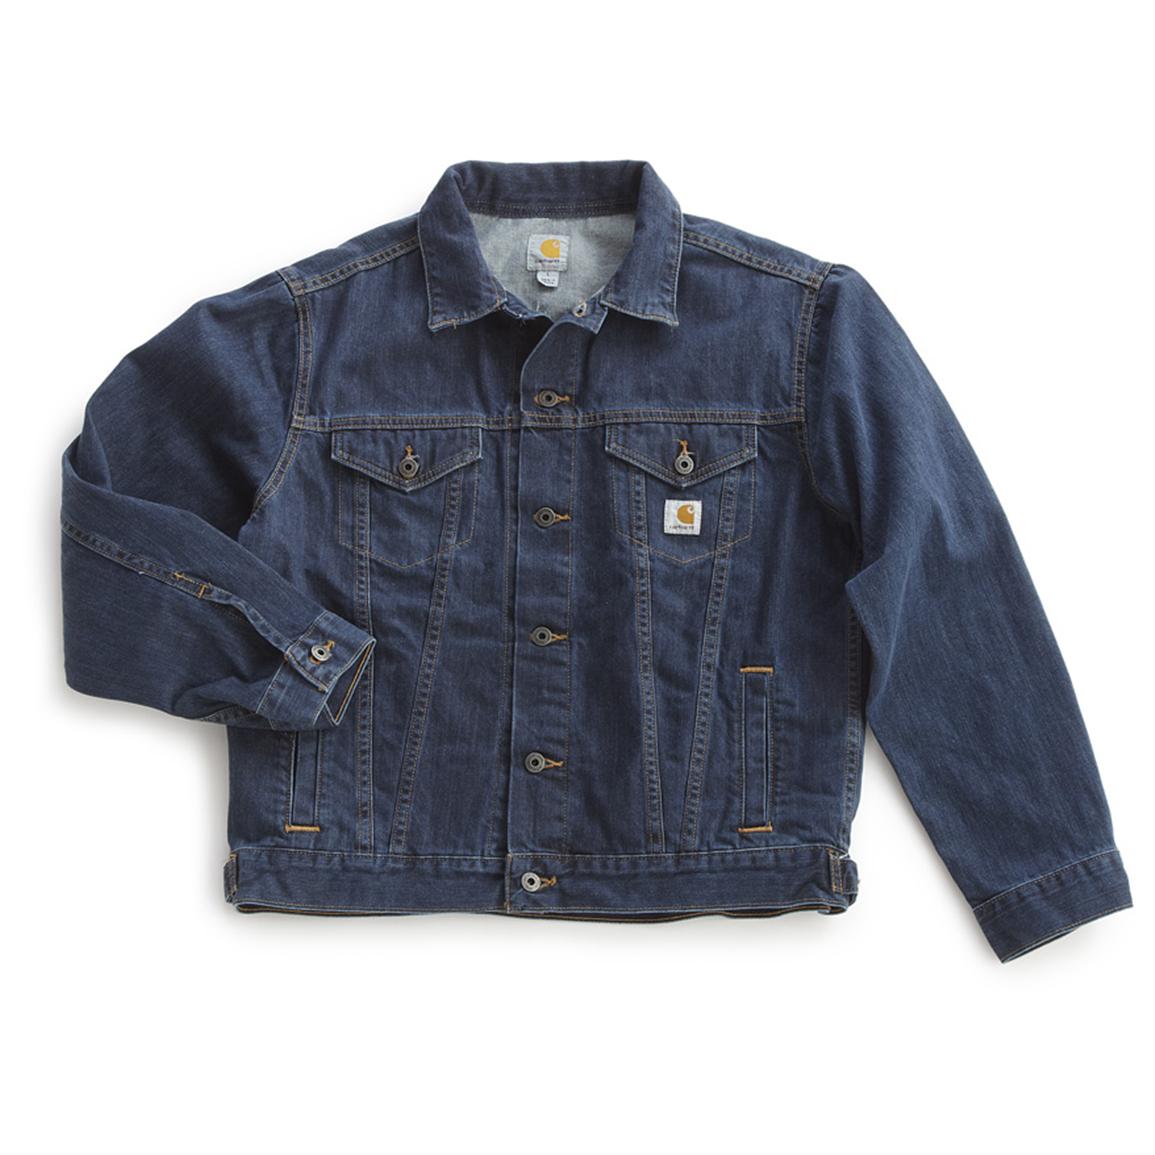 Carhartt Denim Jean Jacket - 594015, Uninsulated Jackets & Coats at ...